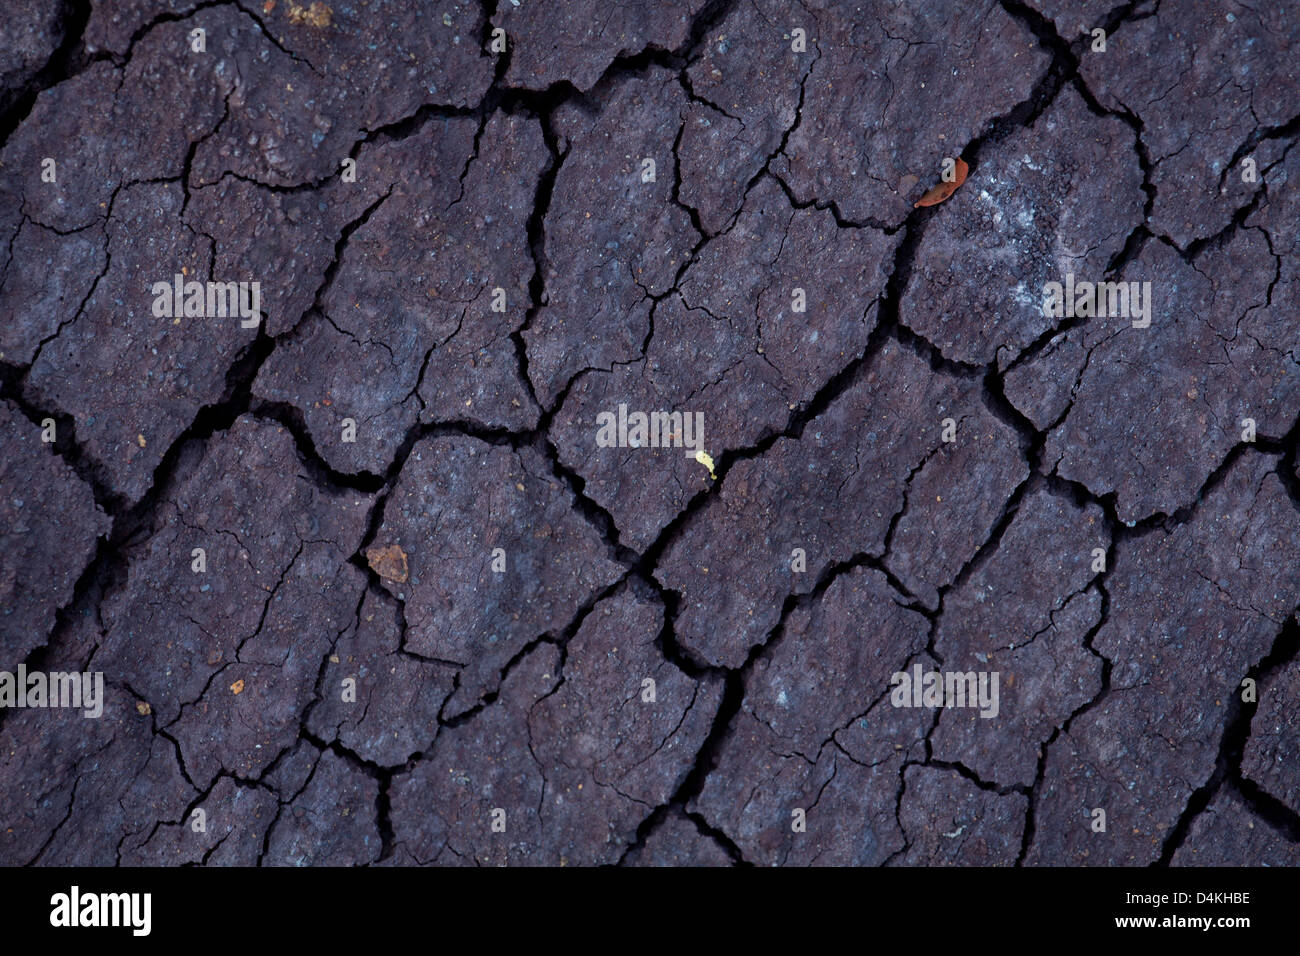 Cracked earth in Sarigua national park, Herrera province, Republic of Panama. Stock Photo